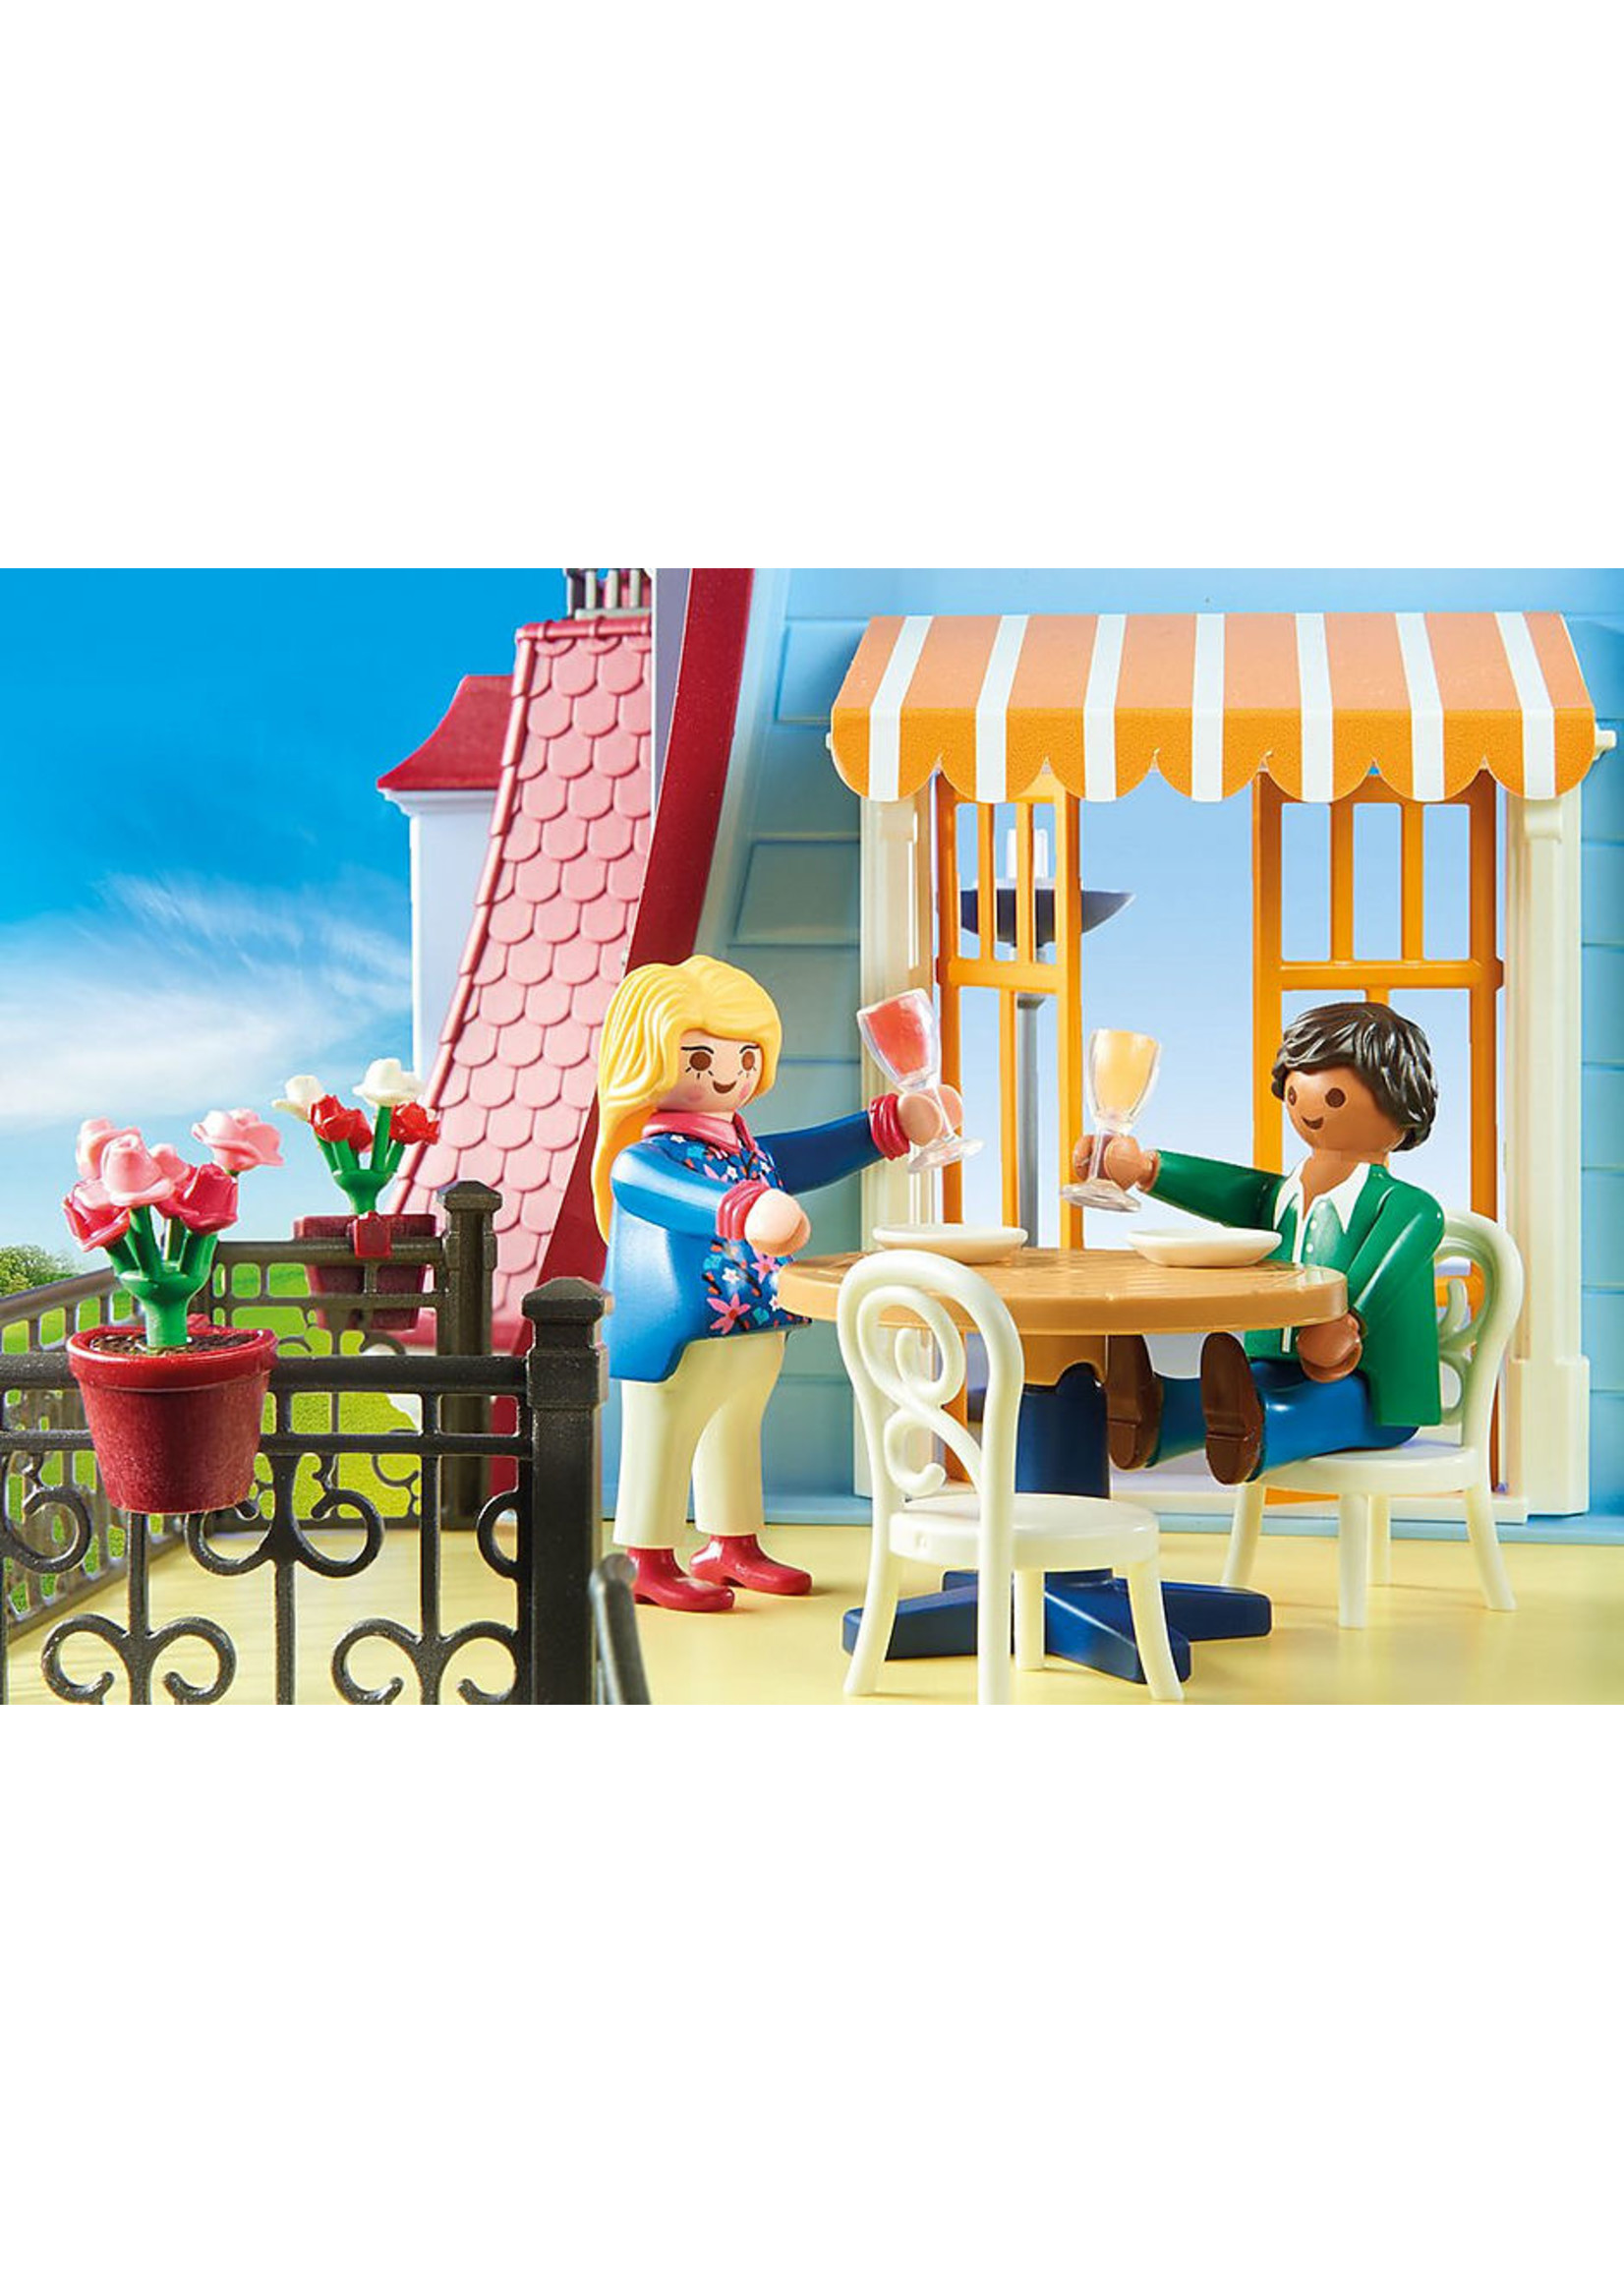 Playmobil 70205 - Large Dollhouse - Hub Hobby